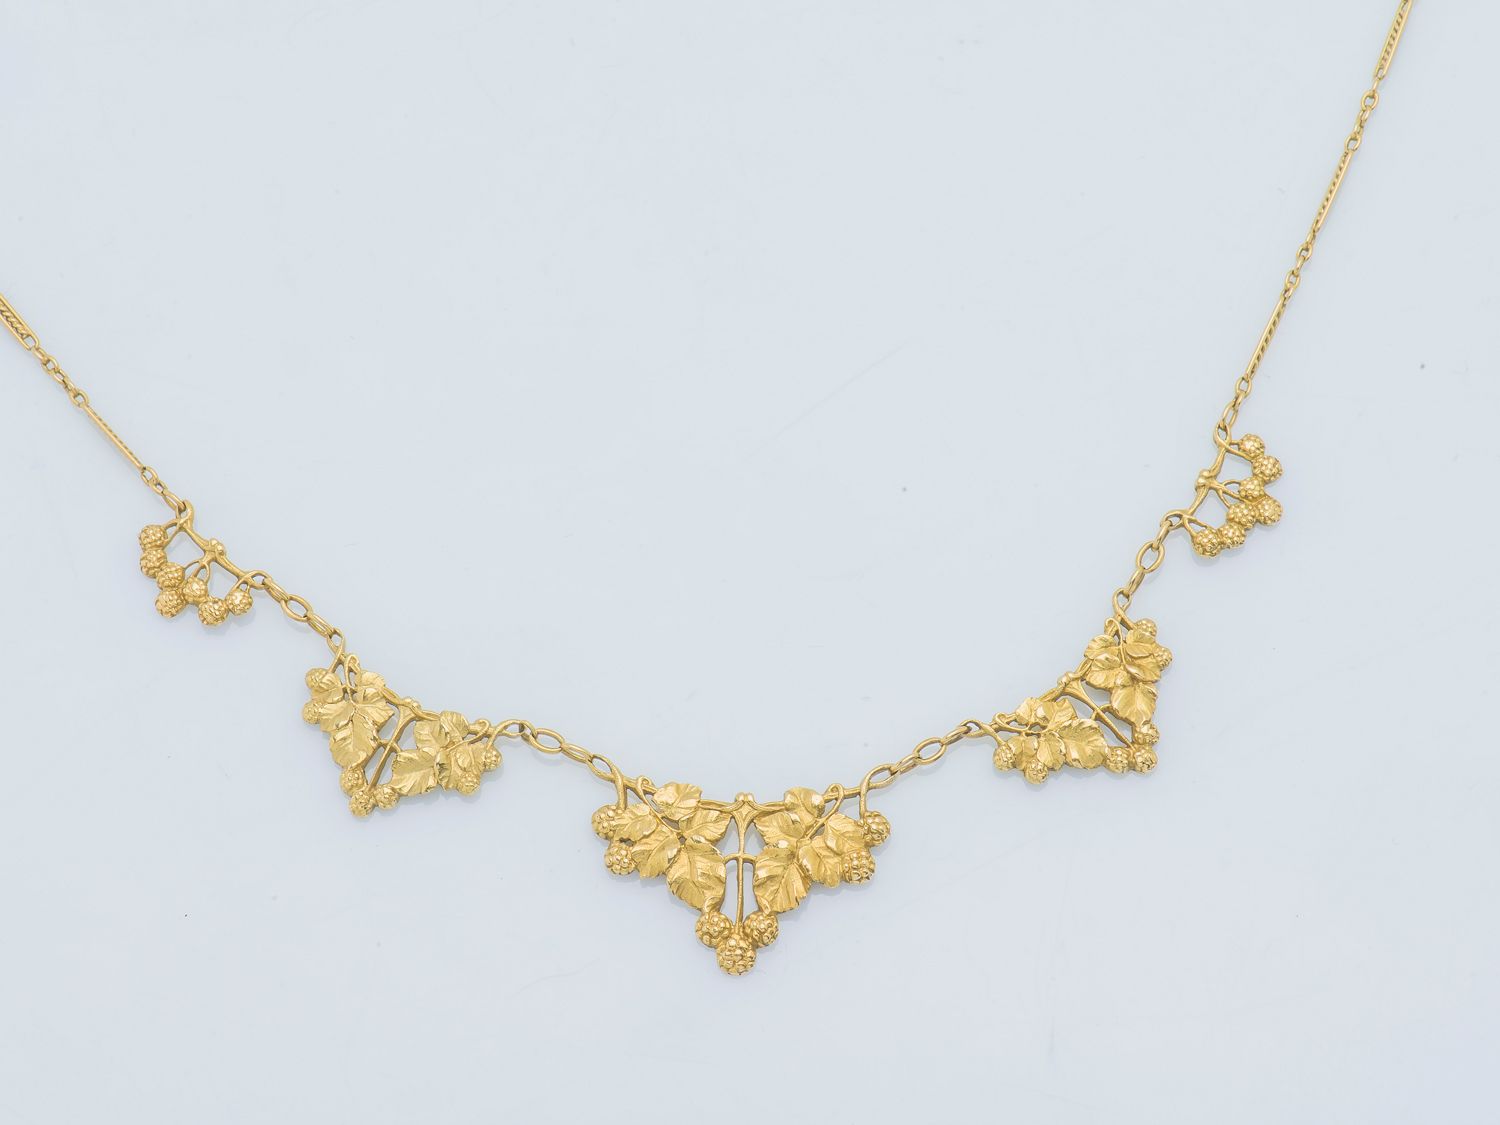 Null 一条18K黄金（750‰）项圈，上面装饰着微微飘落的覆盆子花环。法国作品，19世纪。

长度：41.5厘米 毛重：14.1克。